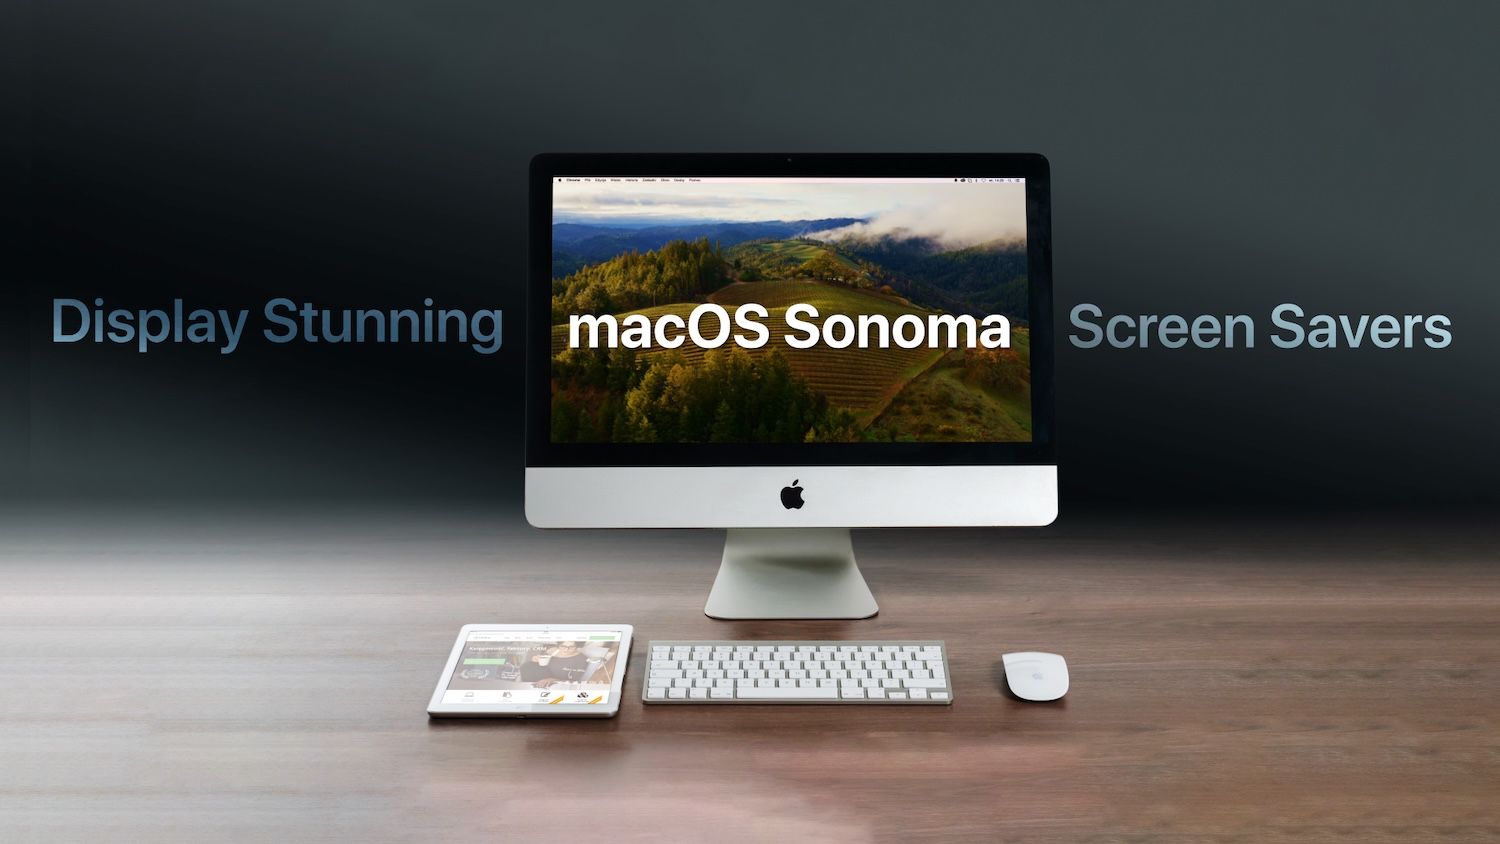 How to Display Stunning macOS Sonoma Screensavers on Mac